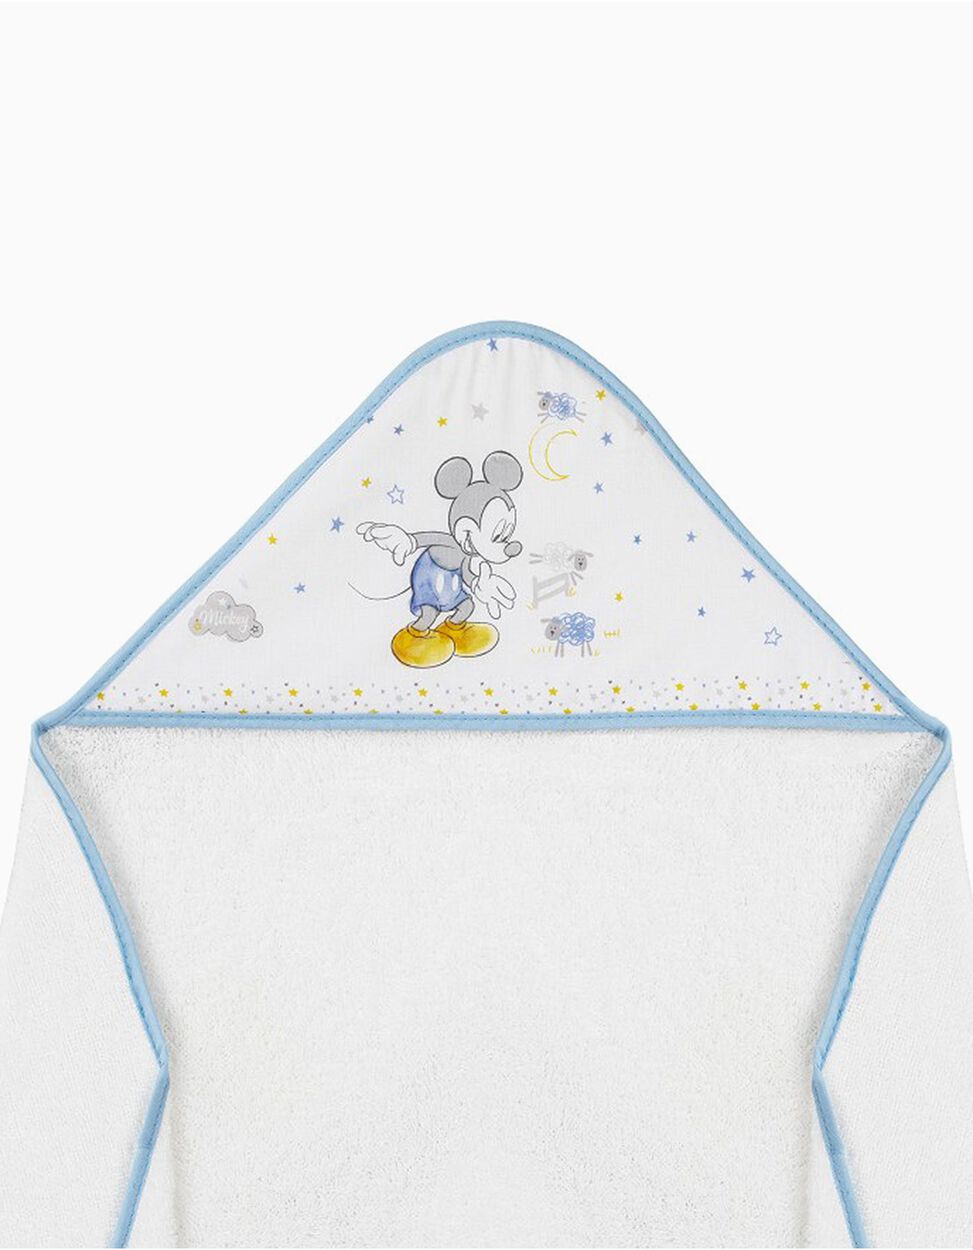 Serviette de Bain Mickey Disney White/Blue 100X100 Cm